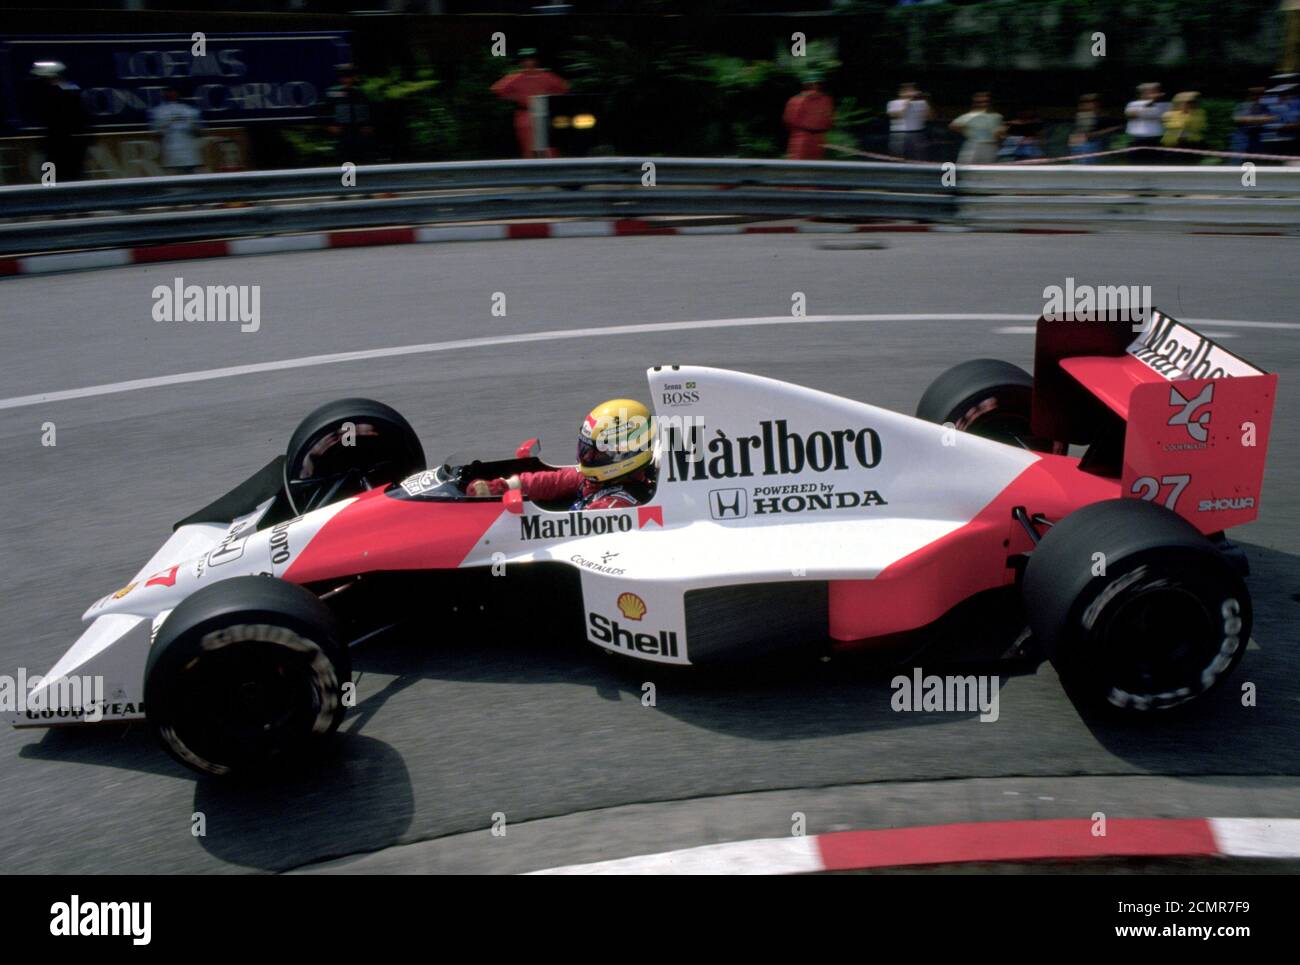 Ayrton Senna Monaco High Resolution Stock Photography and Images - Alamy